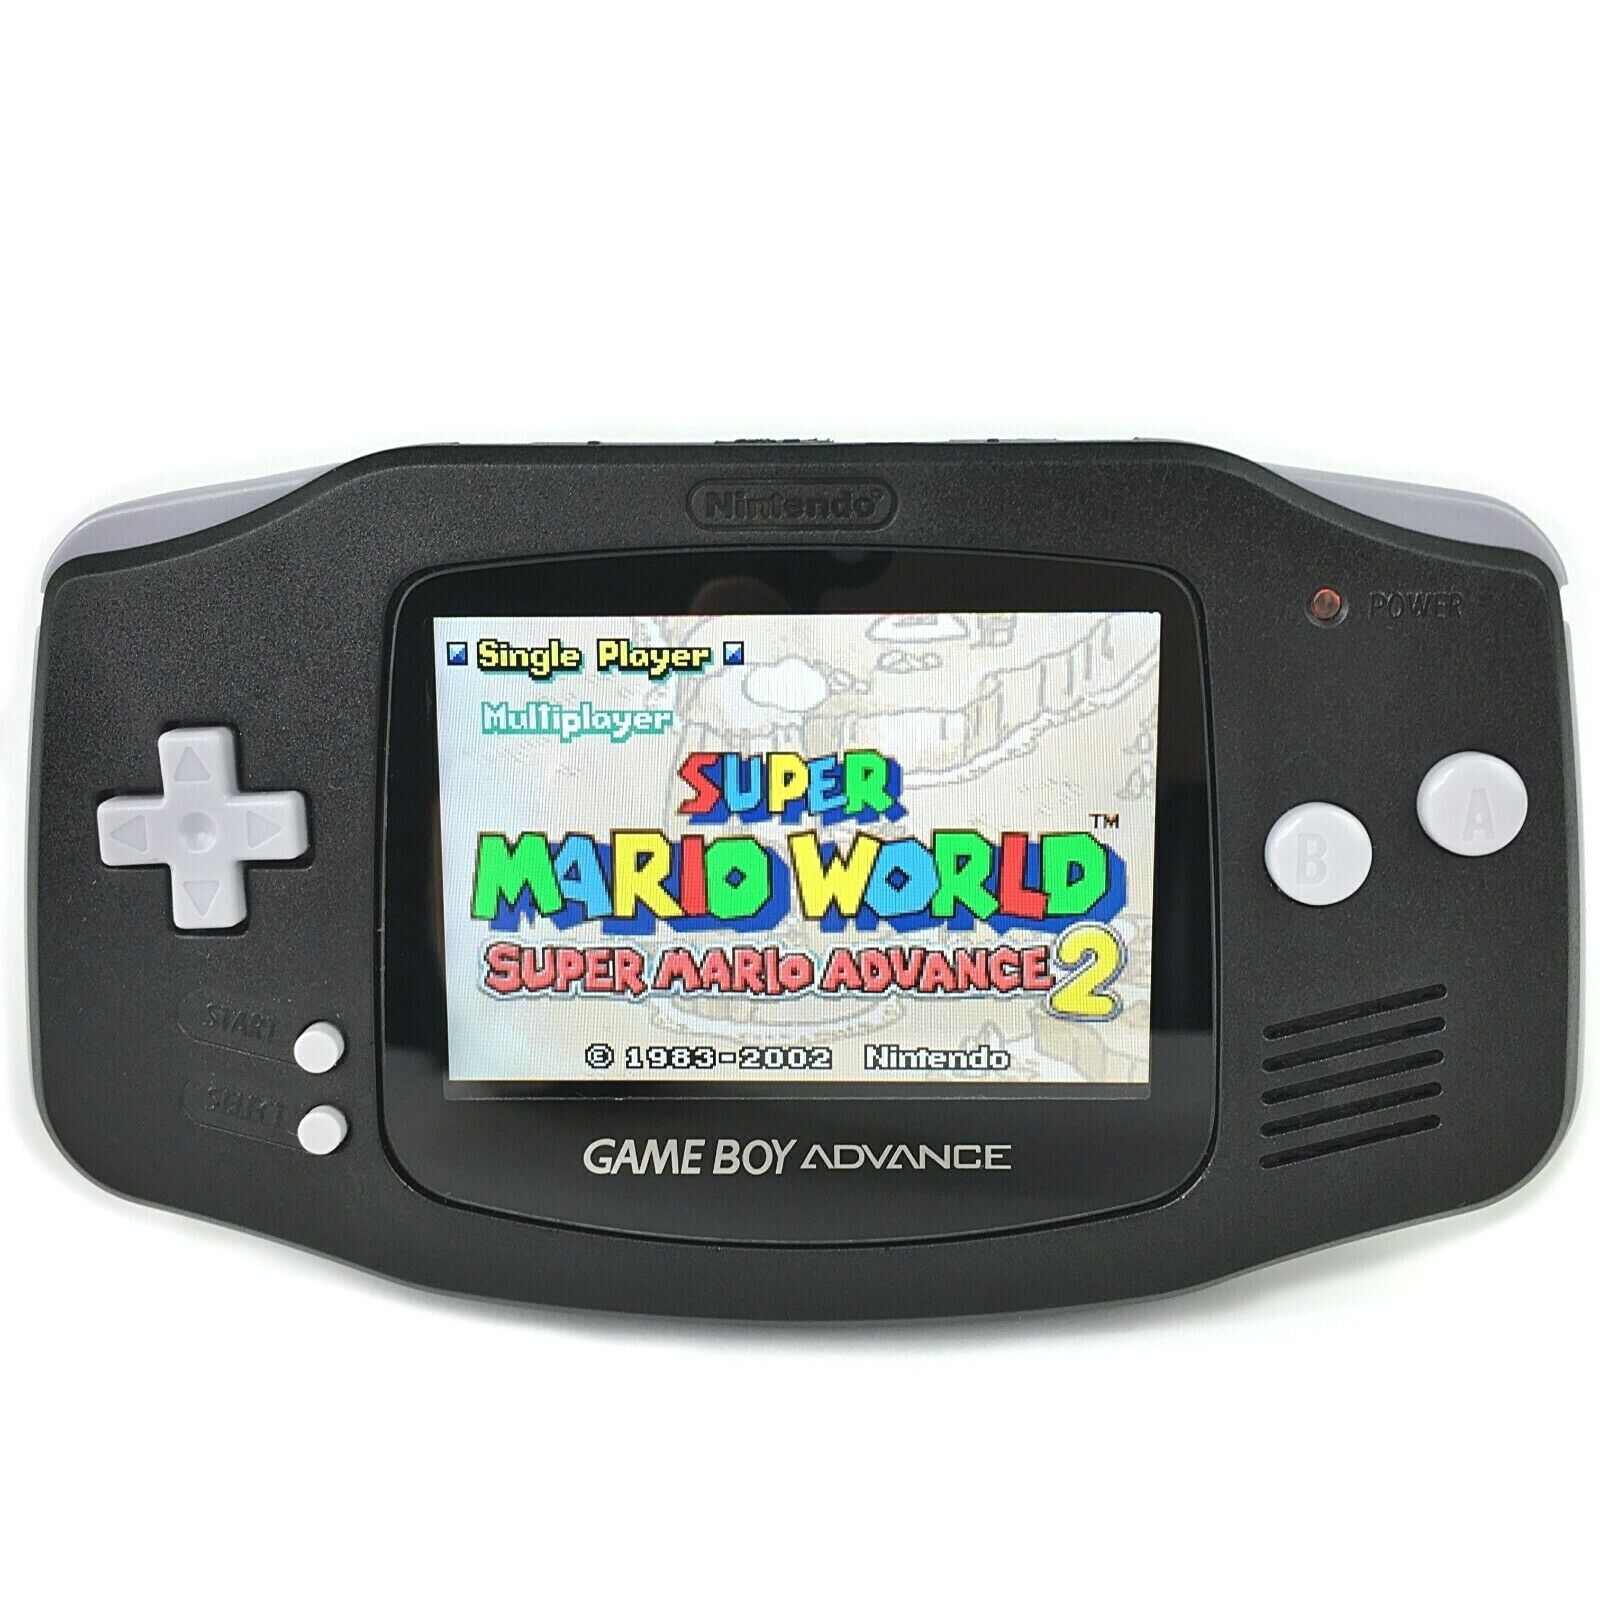 Gameboy Advance IPS V2 Custom Console PICK A COLOR Game Boy Backlit LCD Mod